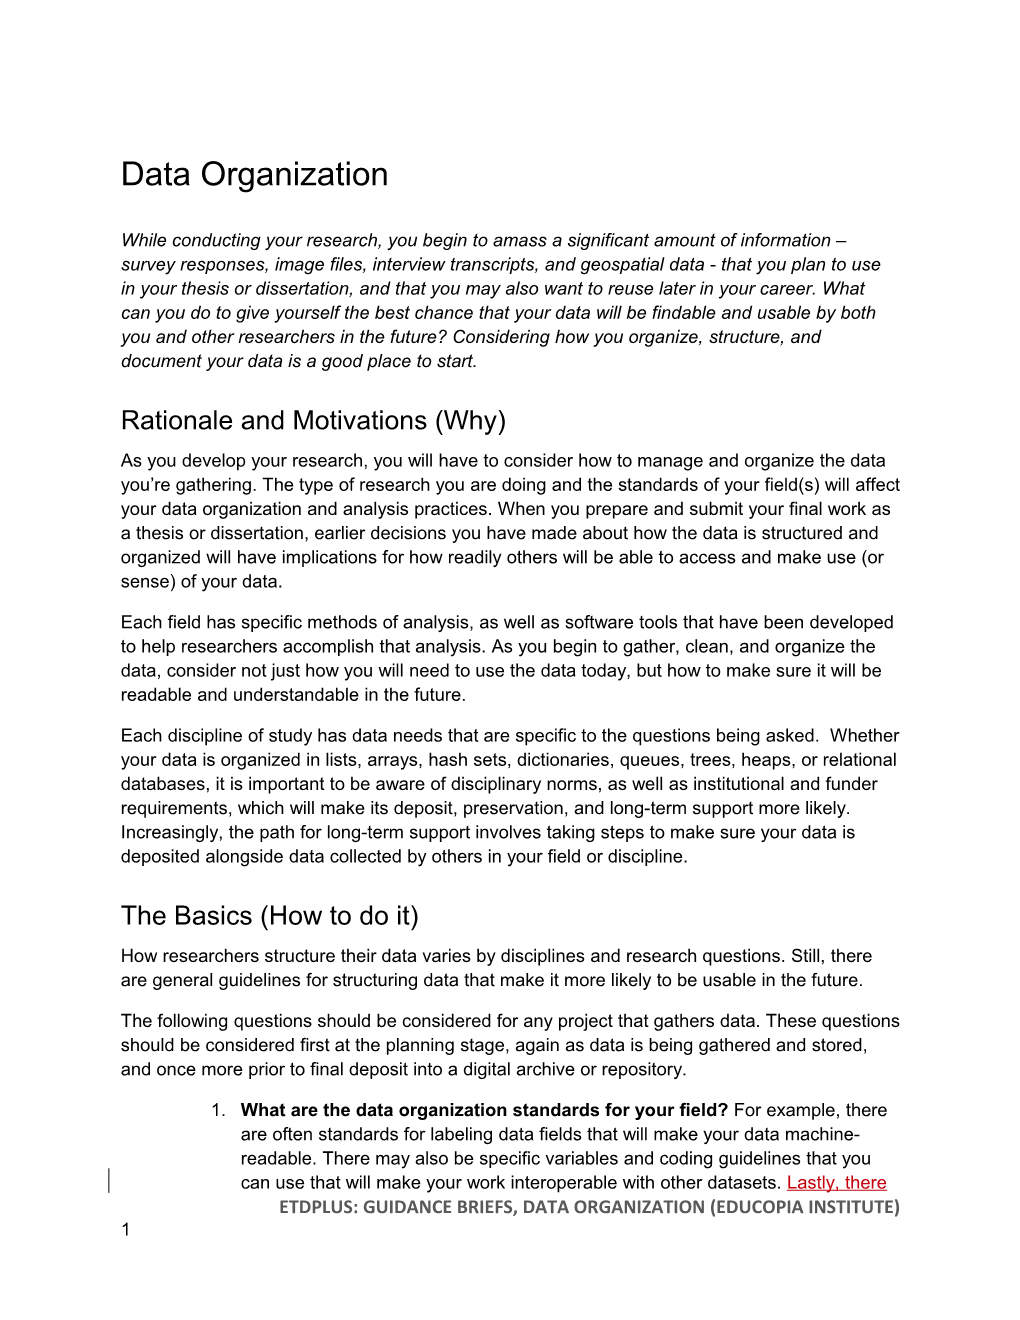 Etdplus: Guidance Briefs, Data Organization (Educopia Institute)